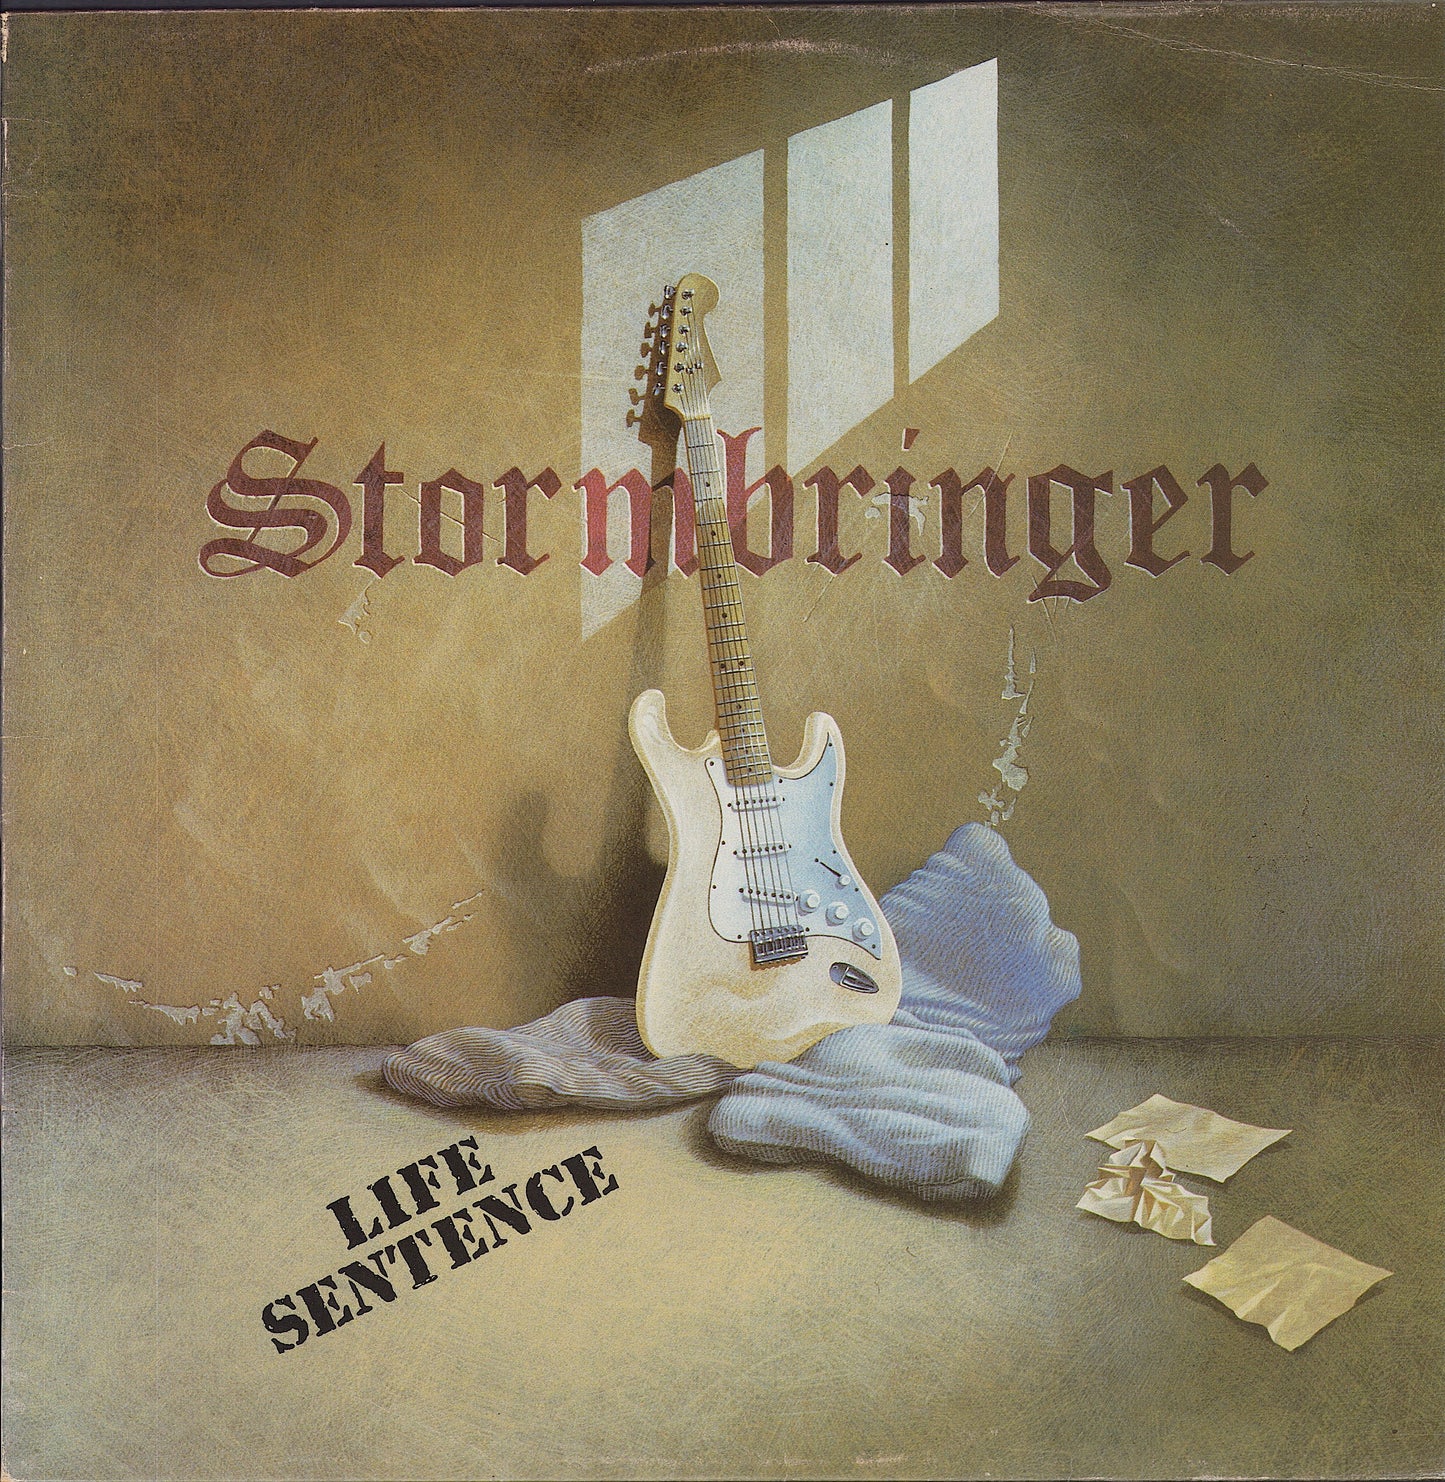 Stormbringer ‎- Life Sentence Vinyl LP